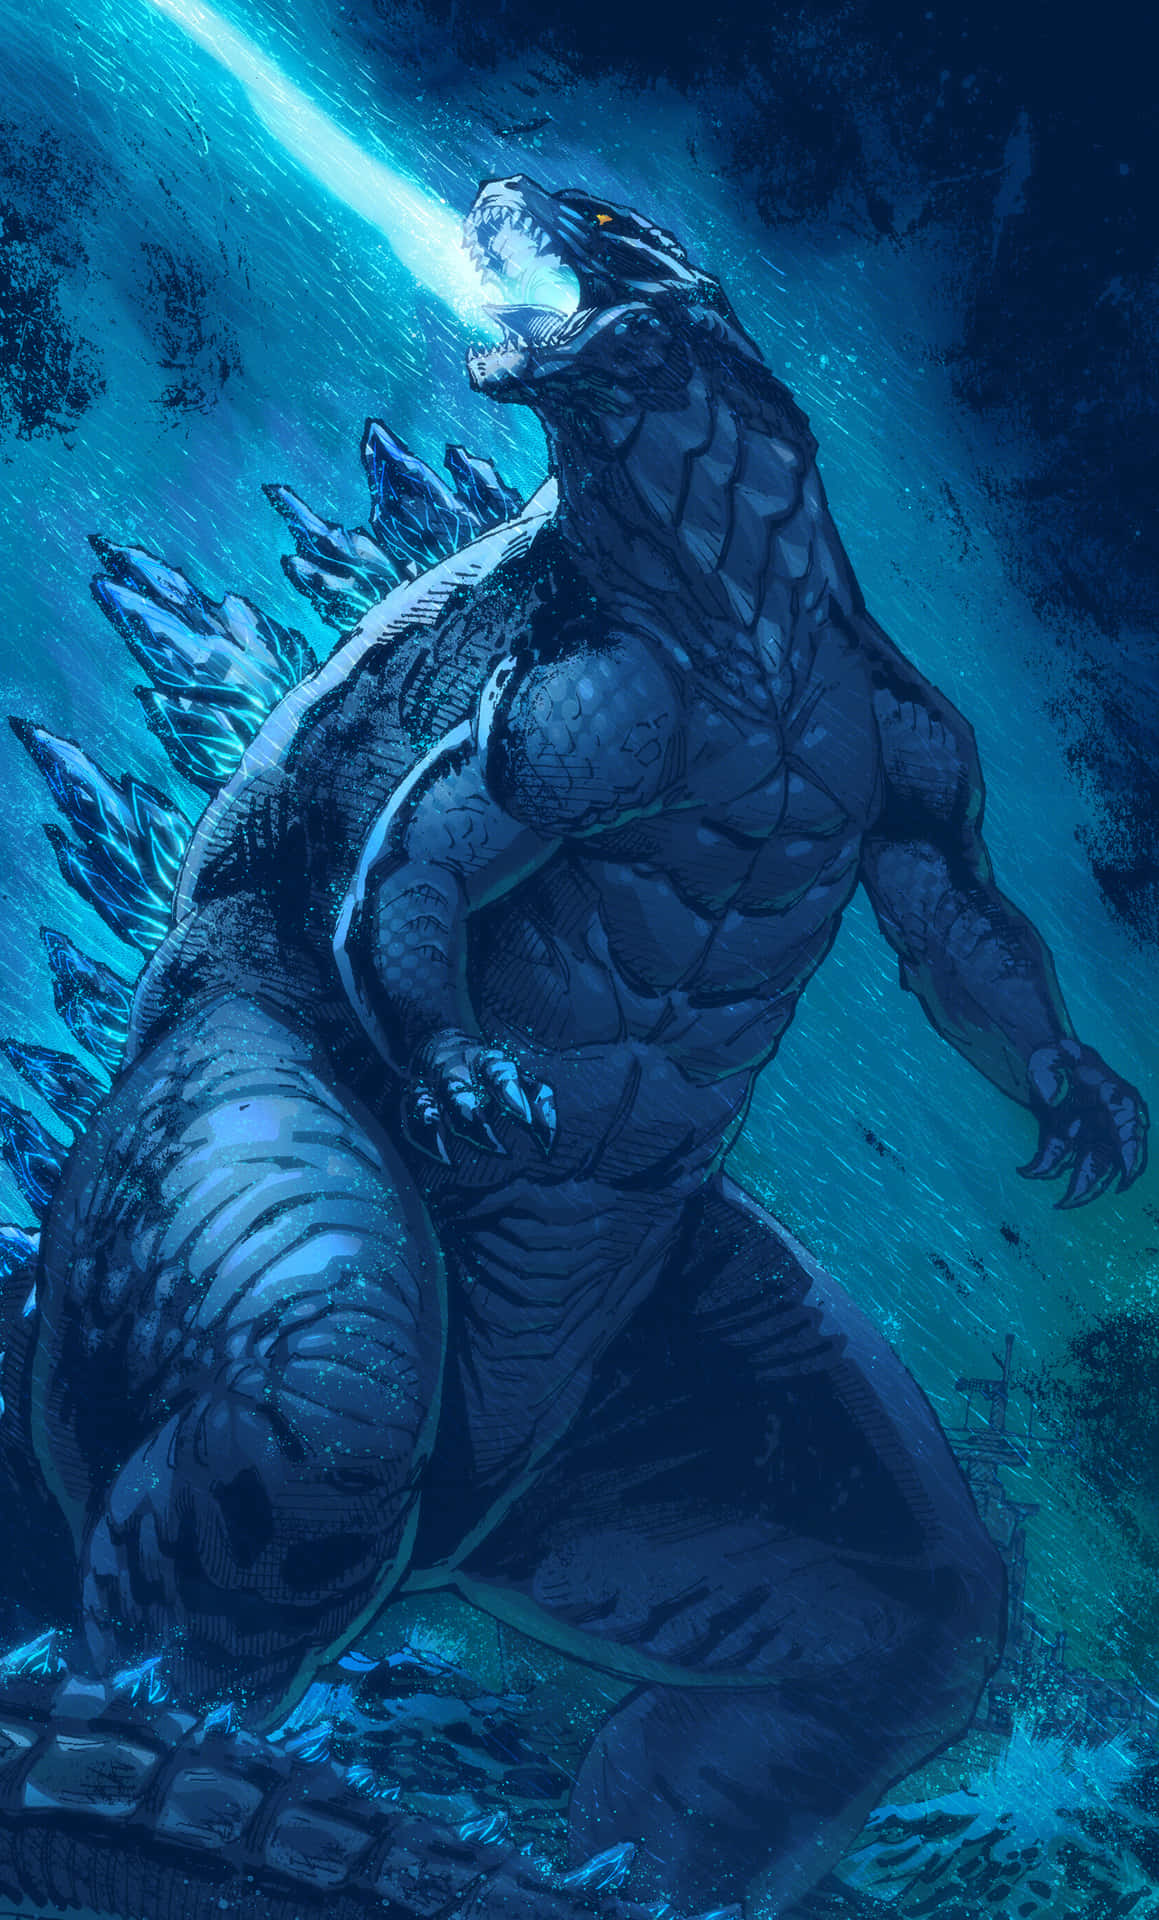 Godzillablaues Laserstrahl-kunstbild